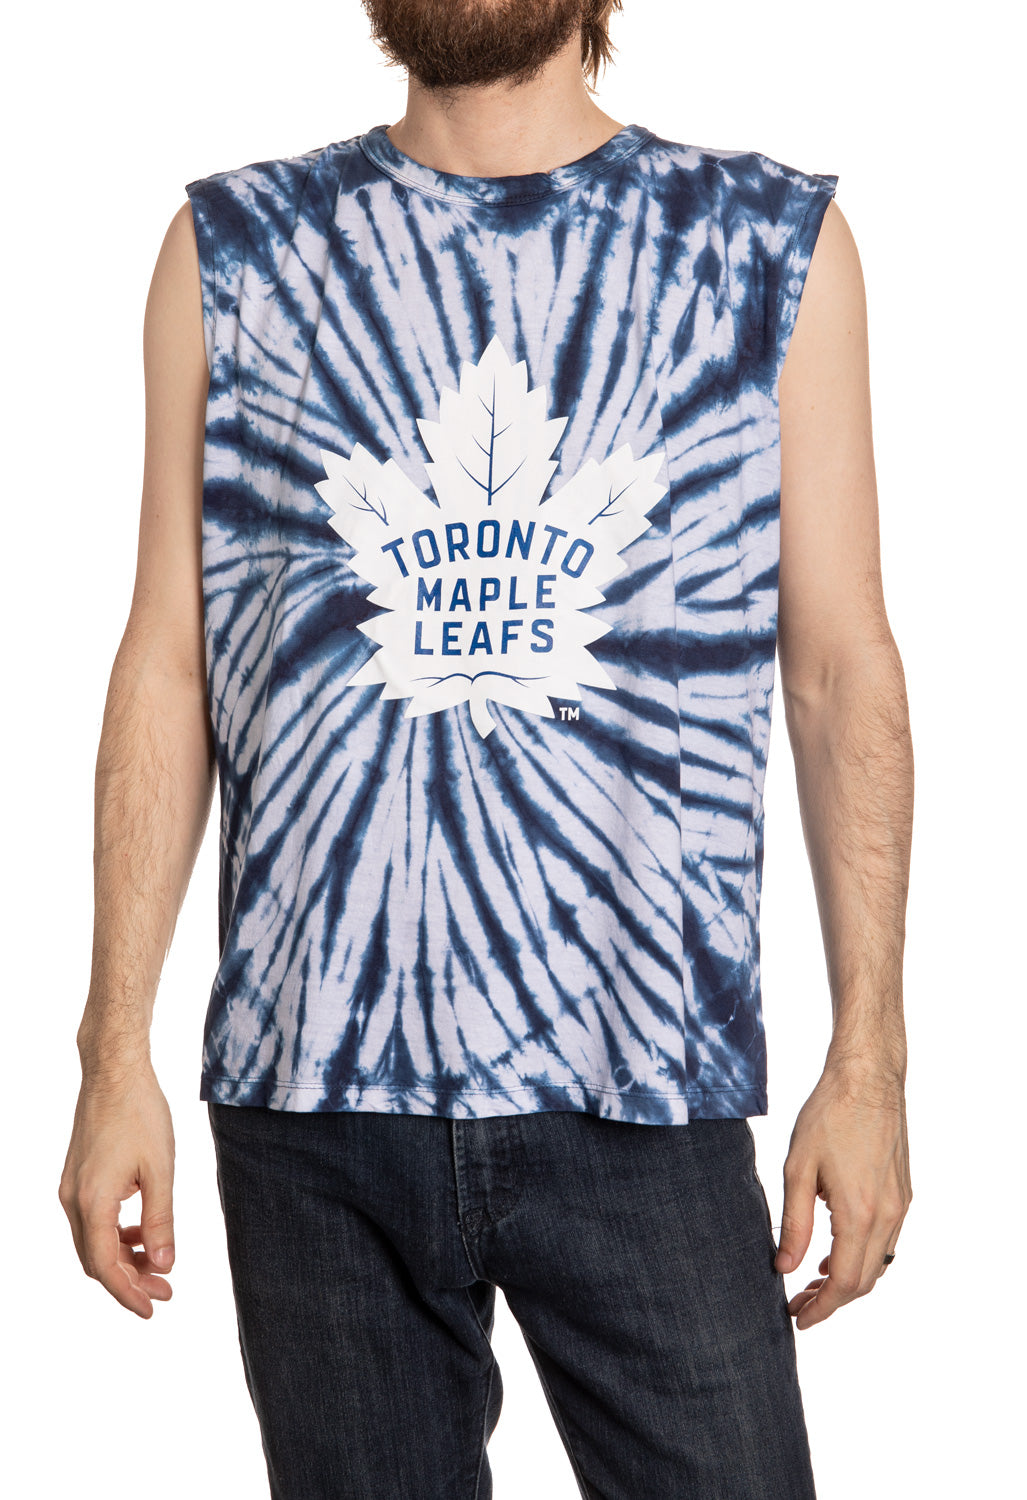 Toronto Maple Leafs Spiral Tie Dye Sleeveless Shirt Front View